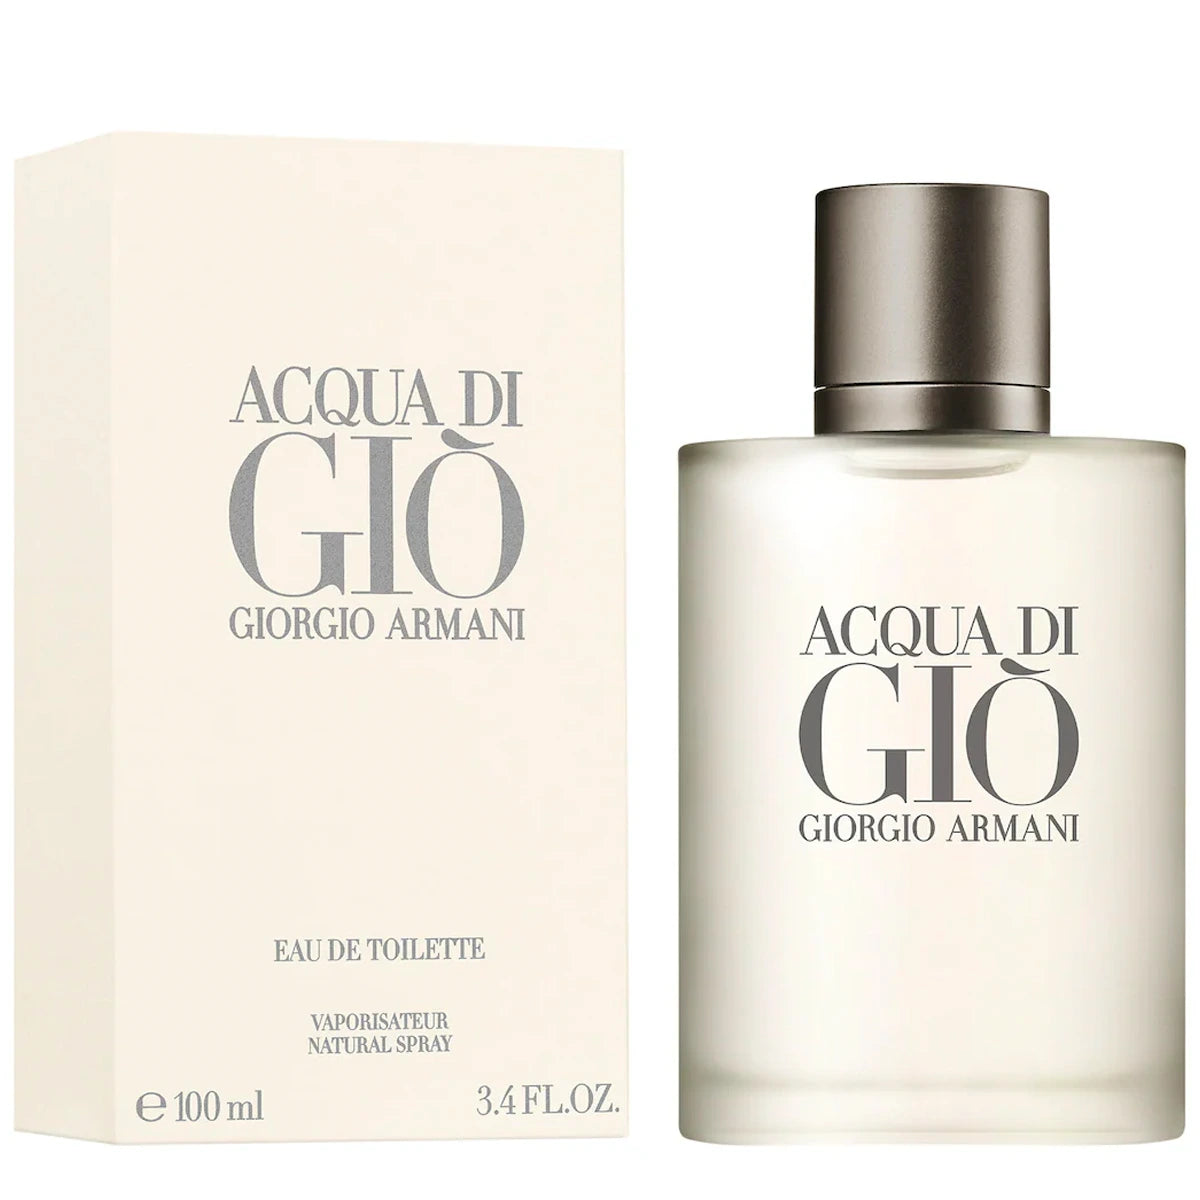 Dior Homme Intense 5.0 oz for men – LaBellePerfumes